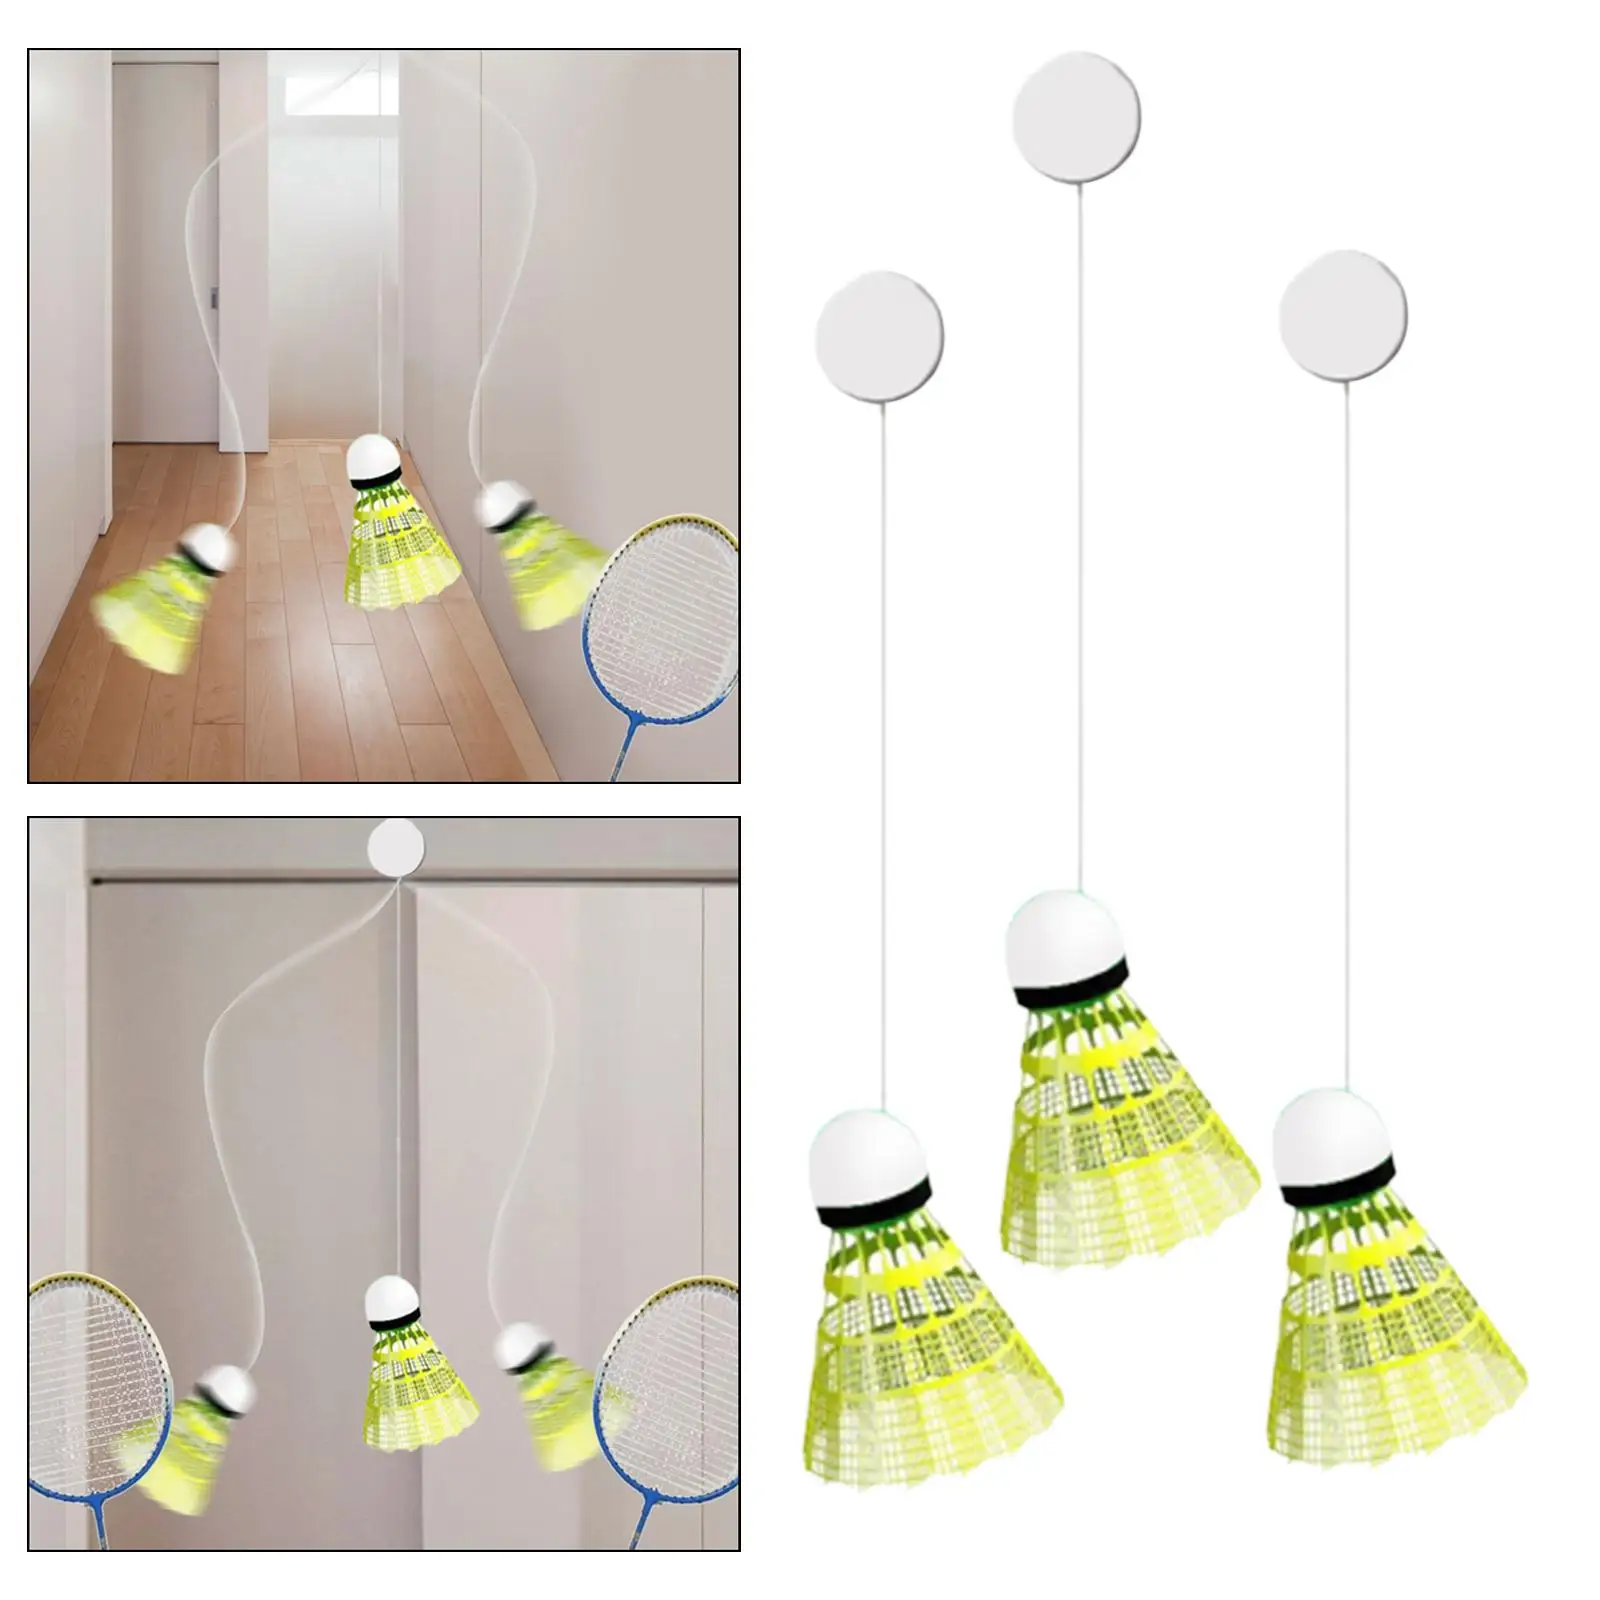 Indoor Badminton Trainer Equipment Solo Practice Single Player Practice Self Training Badminton Training for Sports Home Fitness